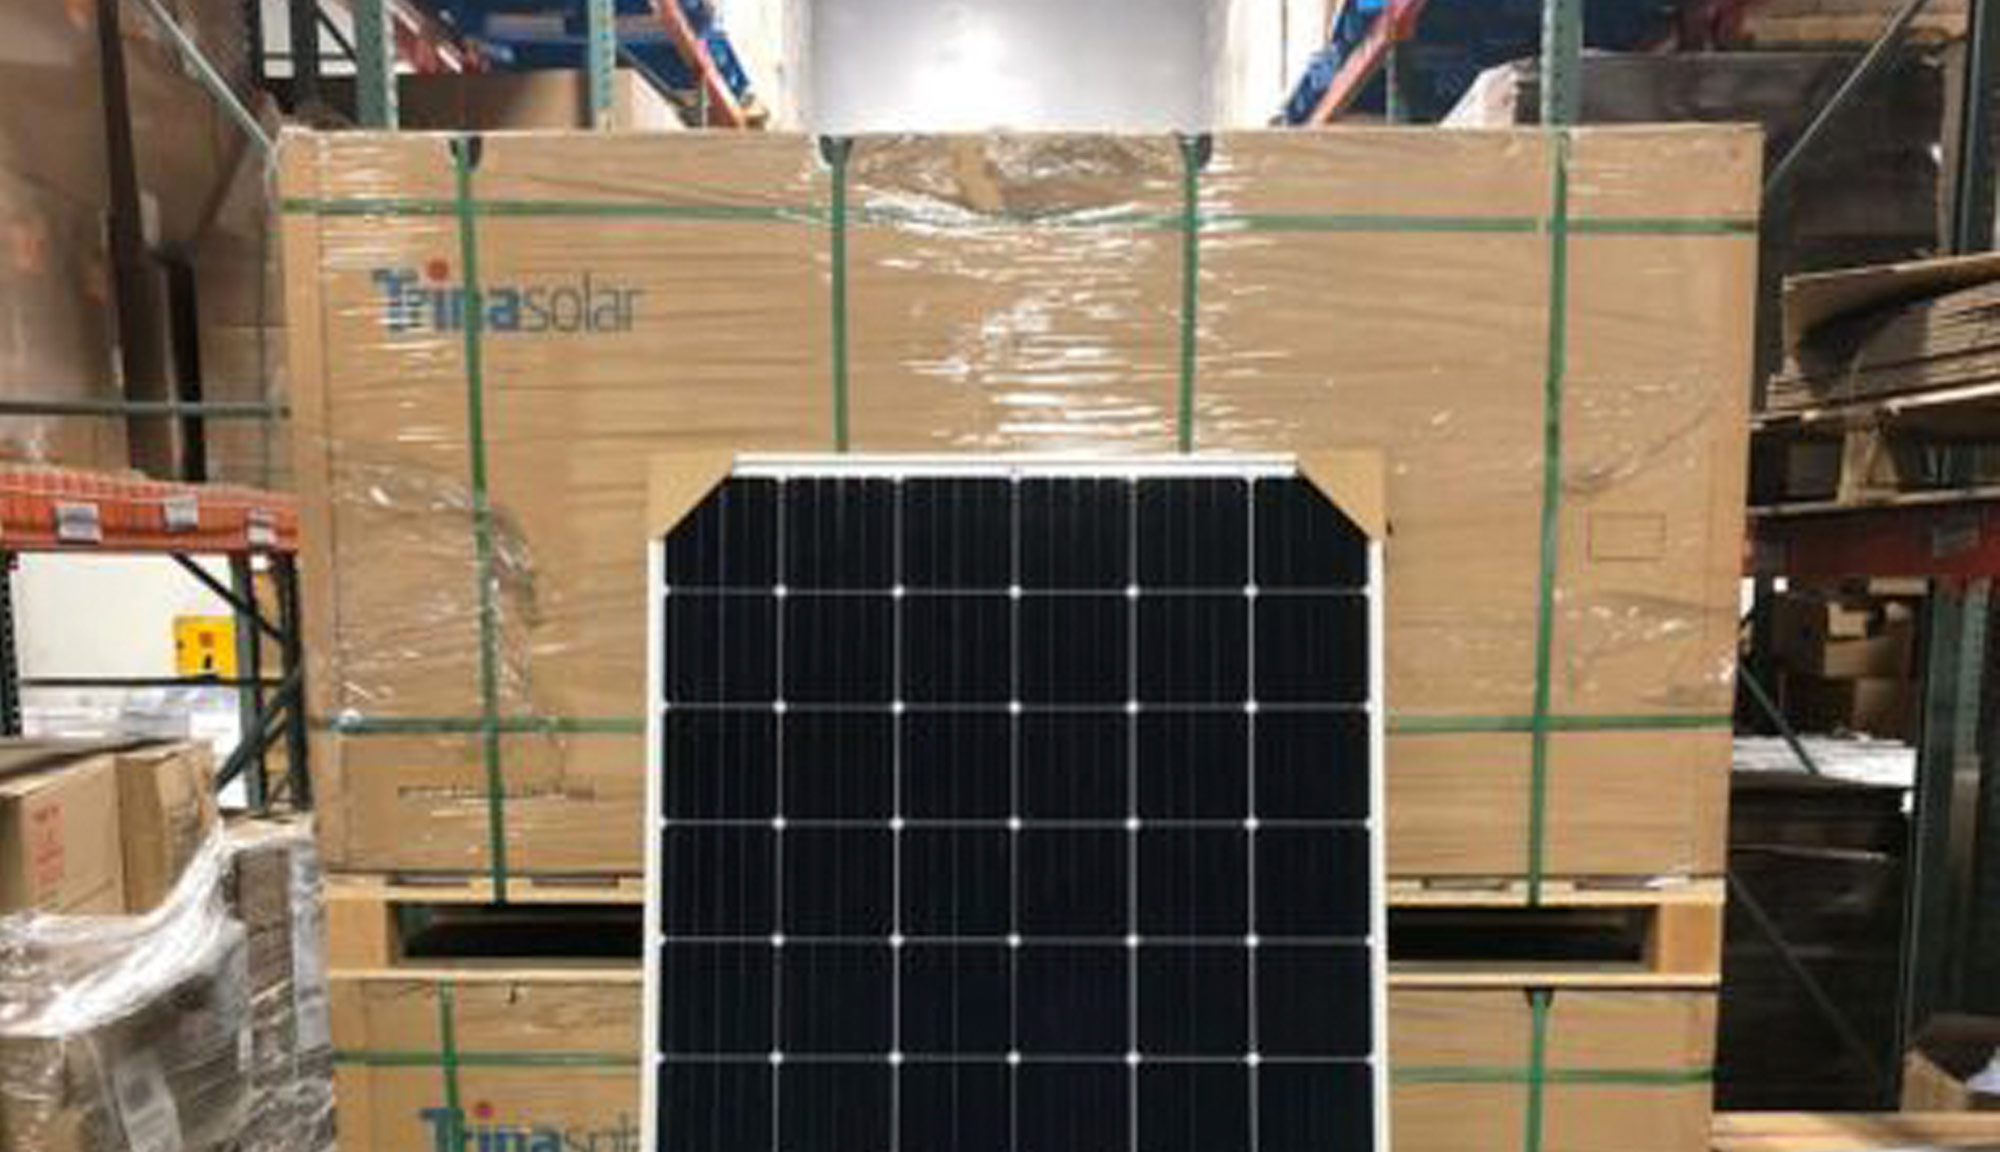 Venta almacen distribuidor paneles solares instalador kit solar Valladolid Segovia Ávila 